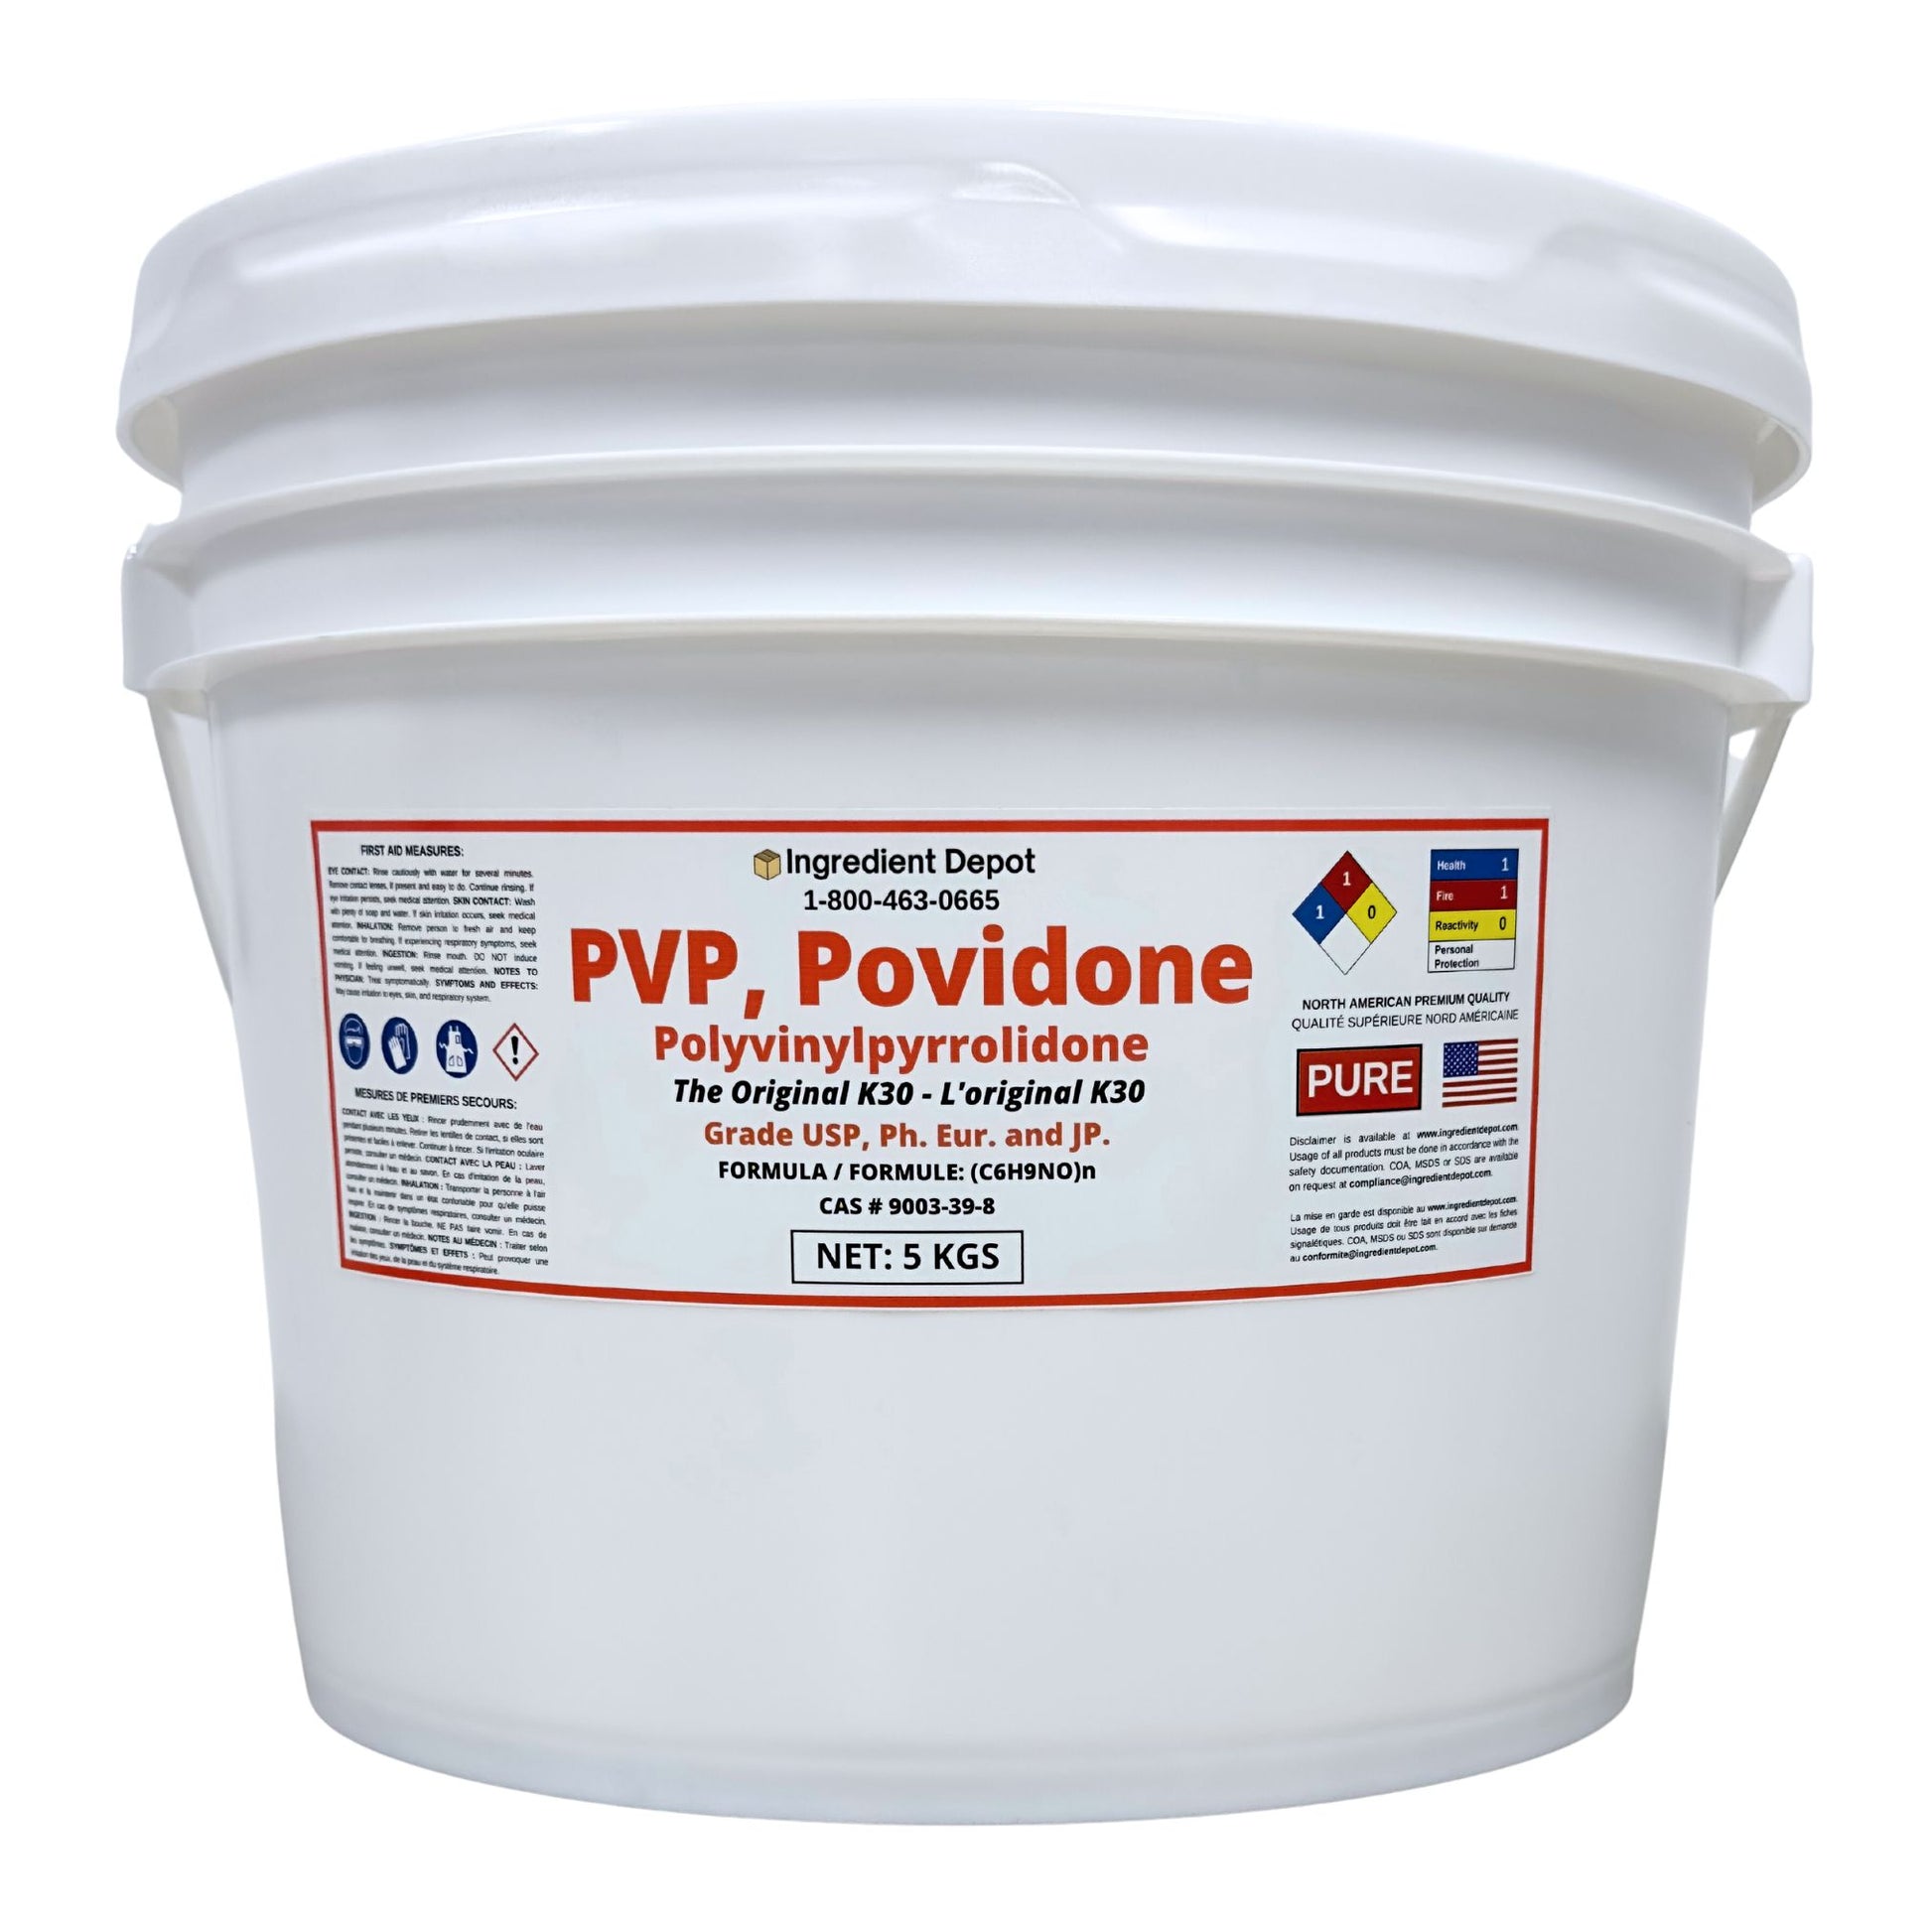 PVP Original K30, Povidone, Polyvinylpyrrolidone 5 kgs